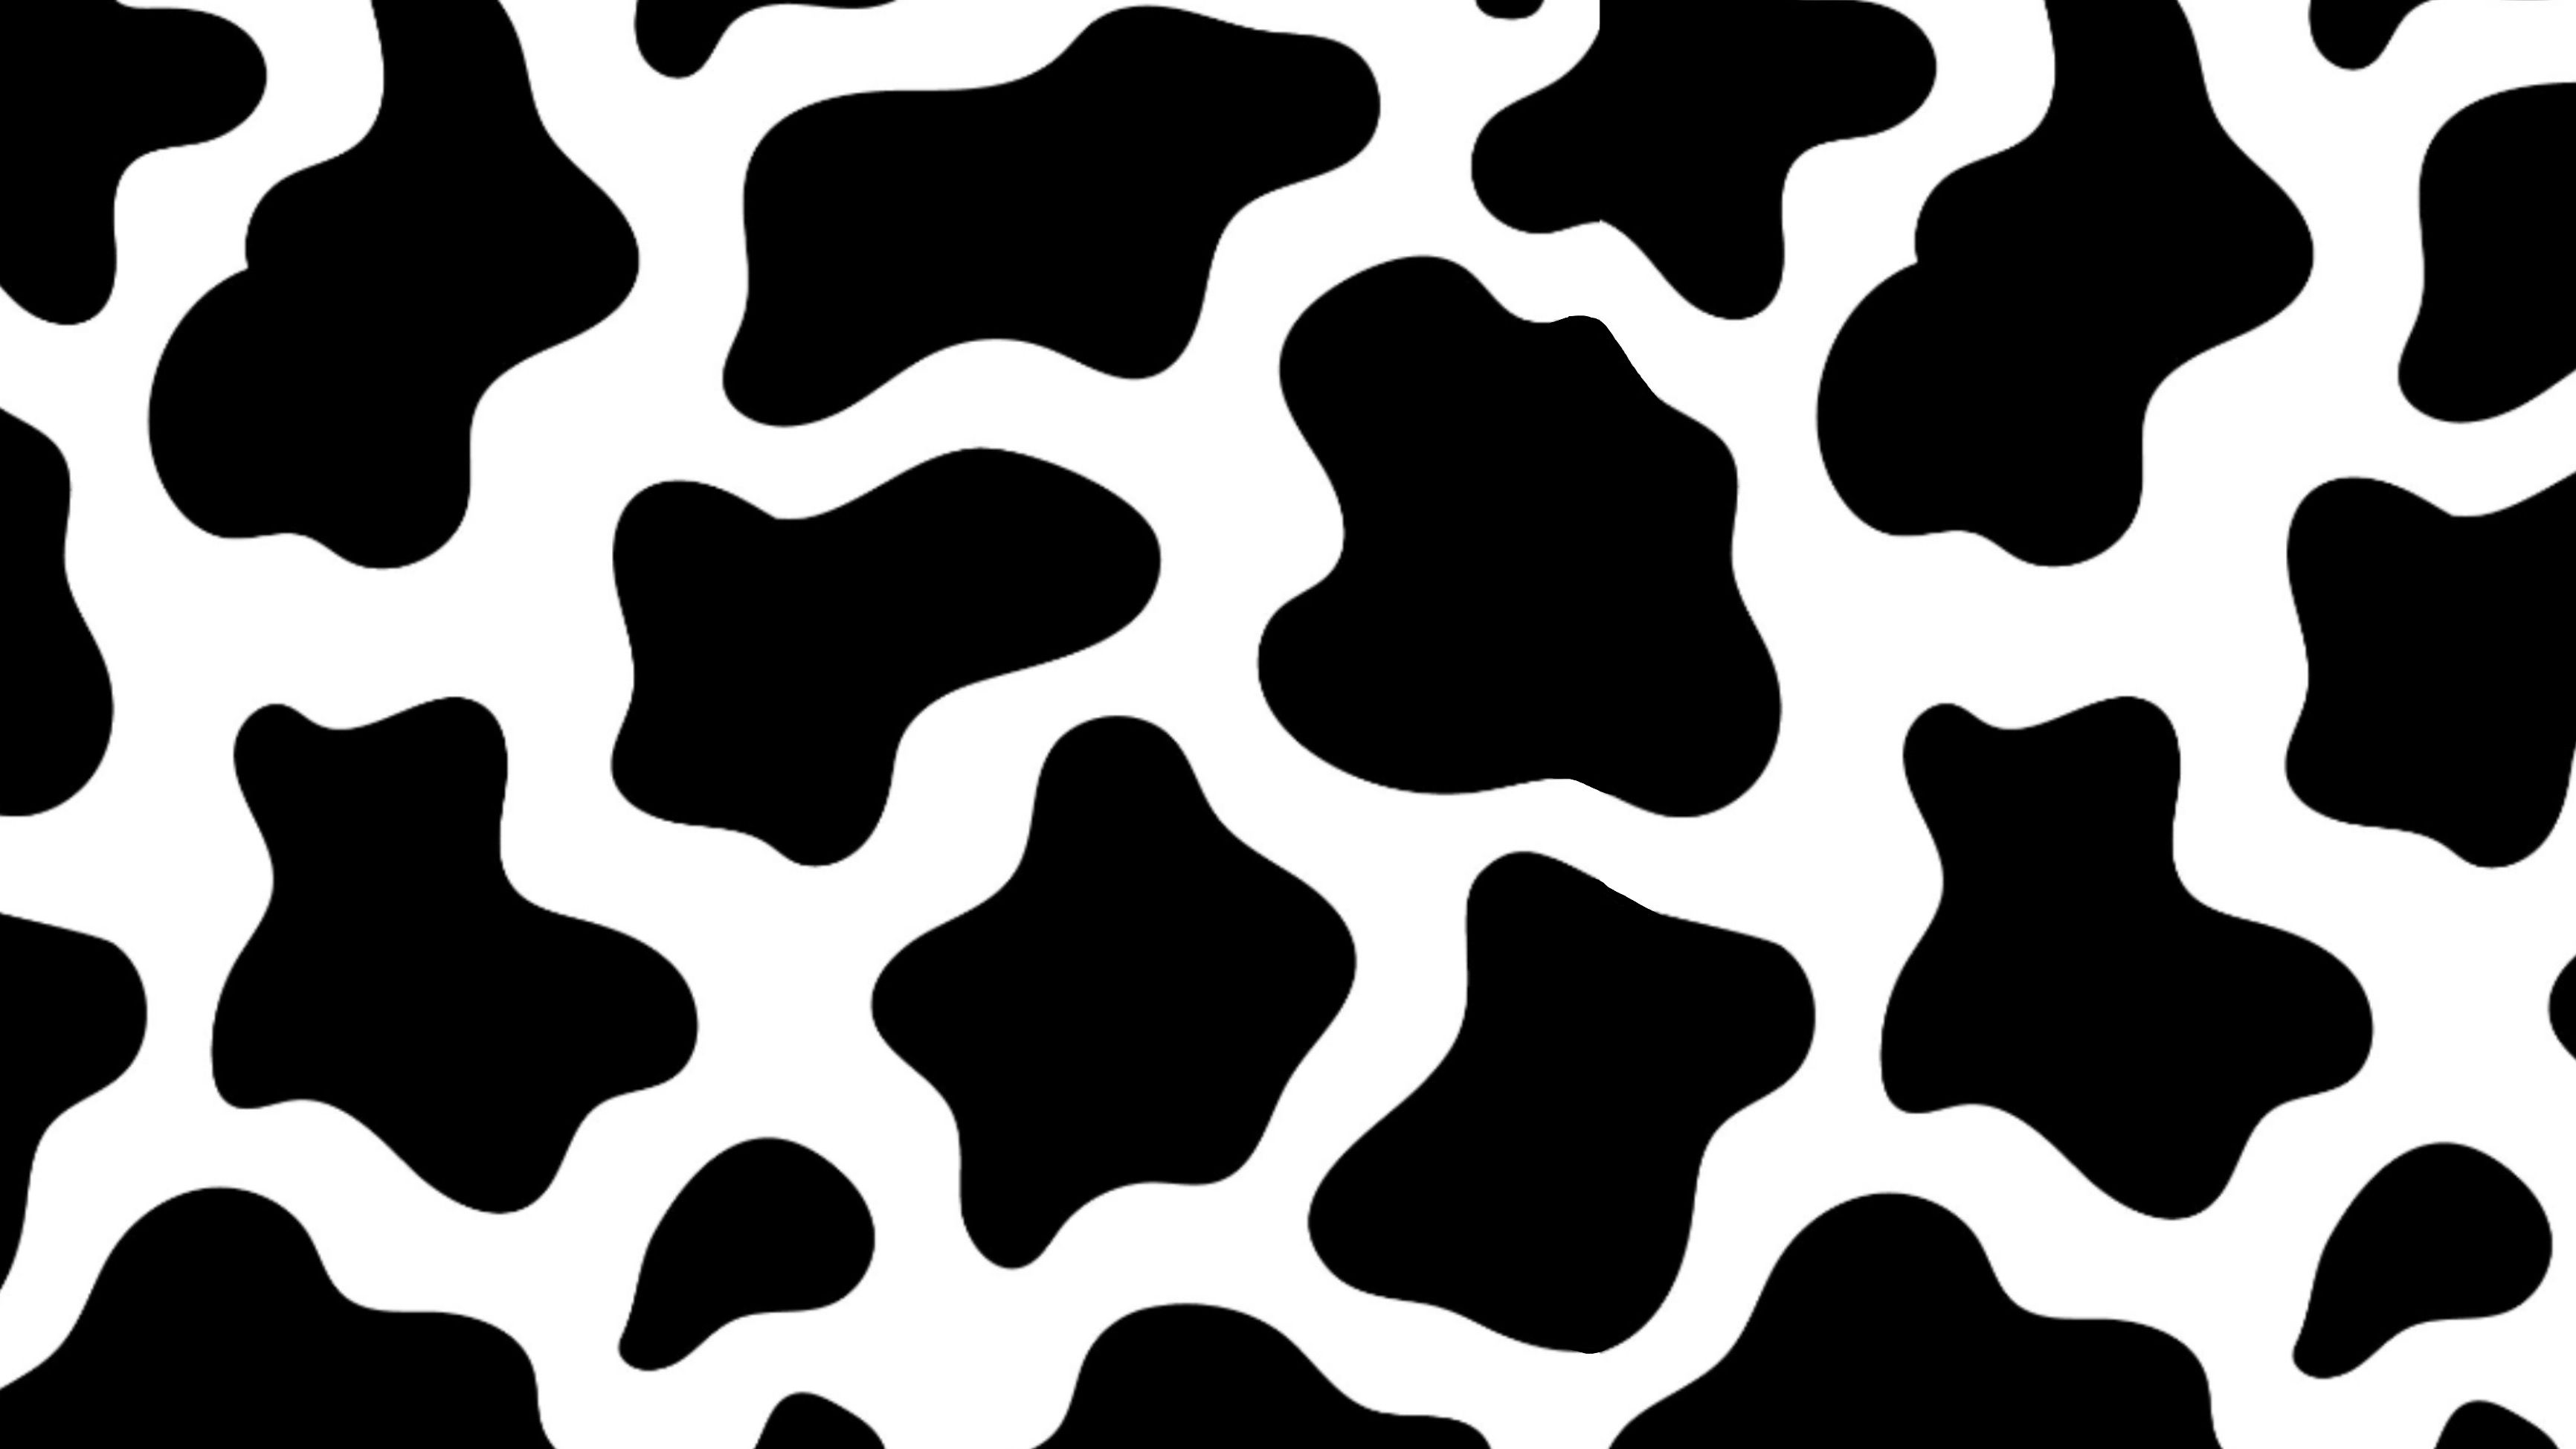 Cow print wall paper. Cow print wallpaper, Cow wallpaper, Cute desktop wallpaper